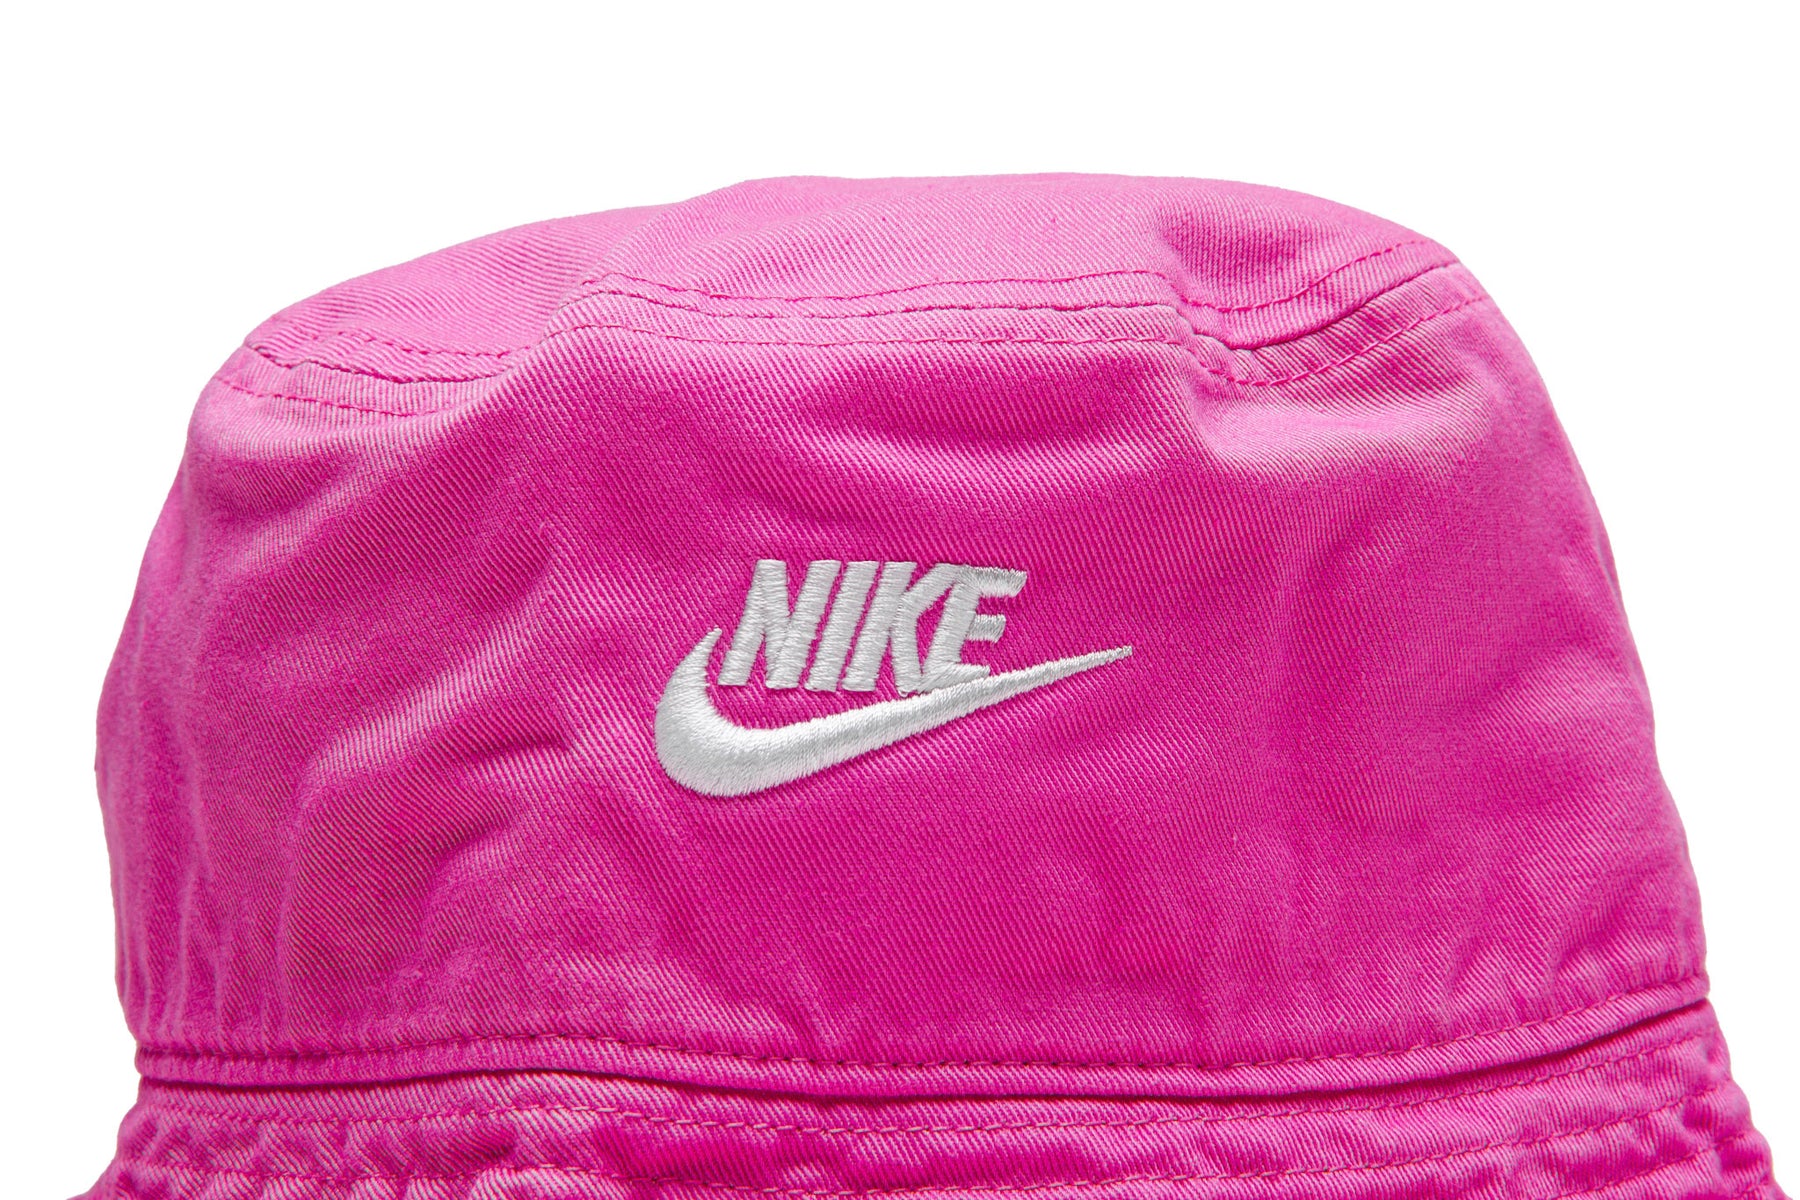 Nike Apex Bucket "Playful Pink"